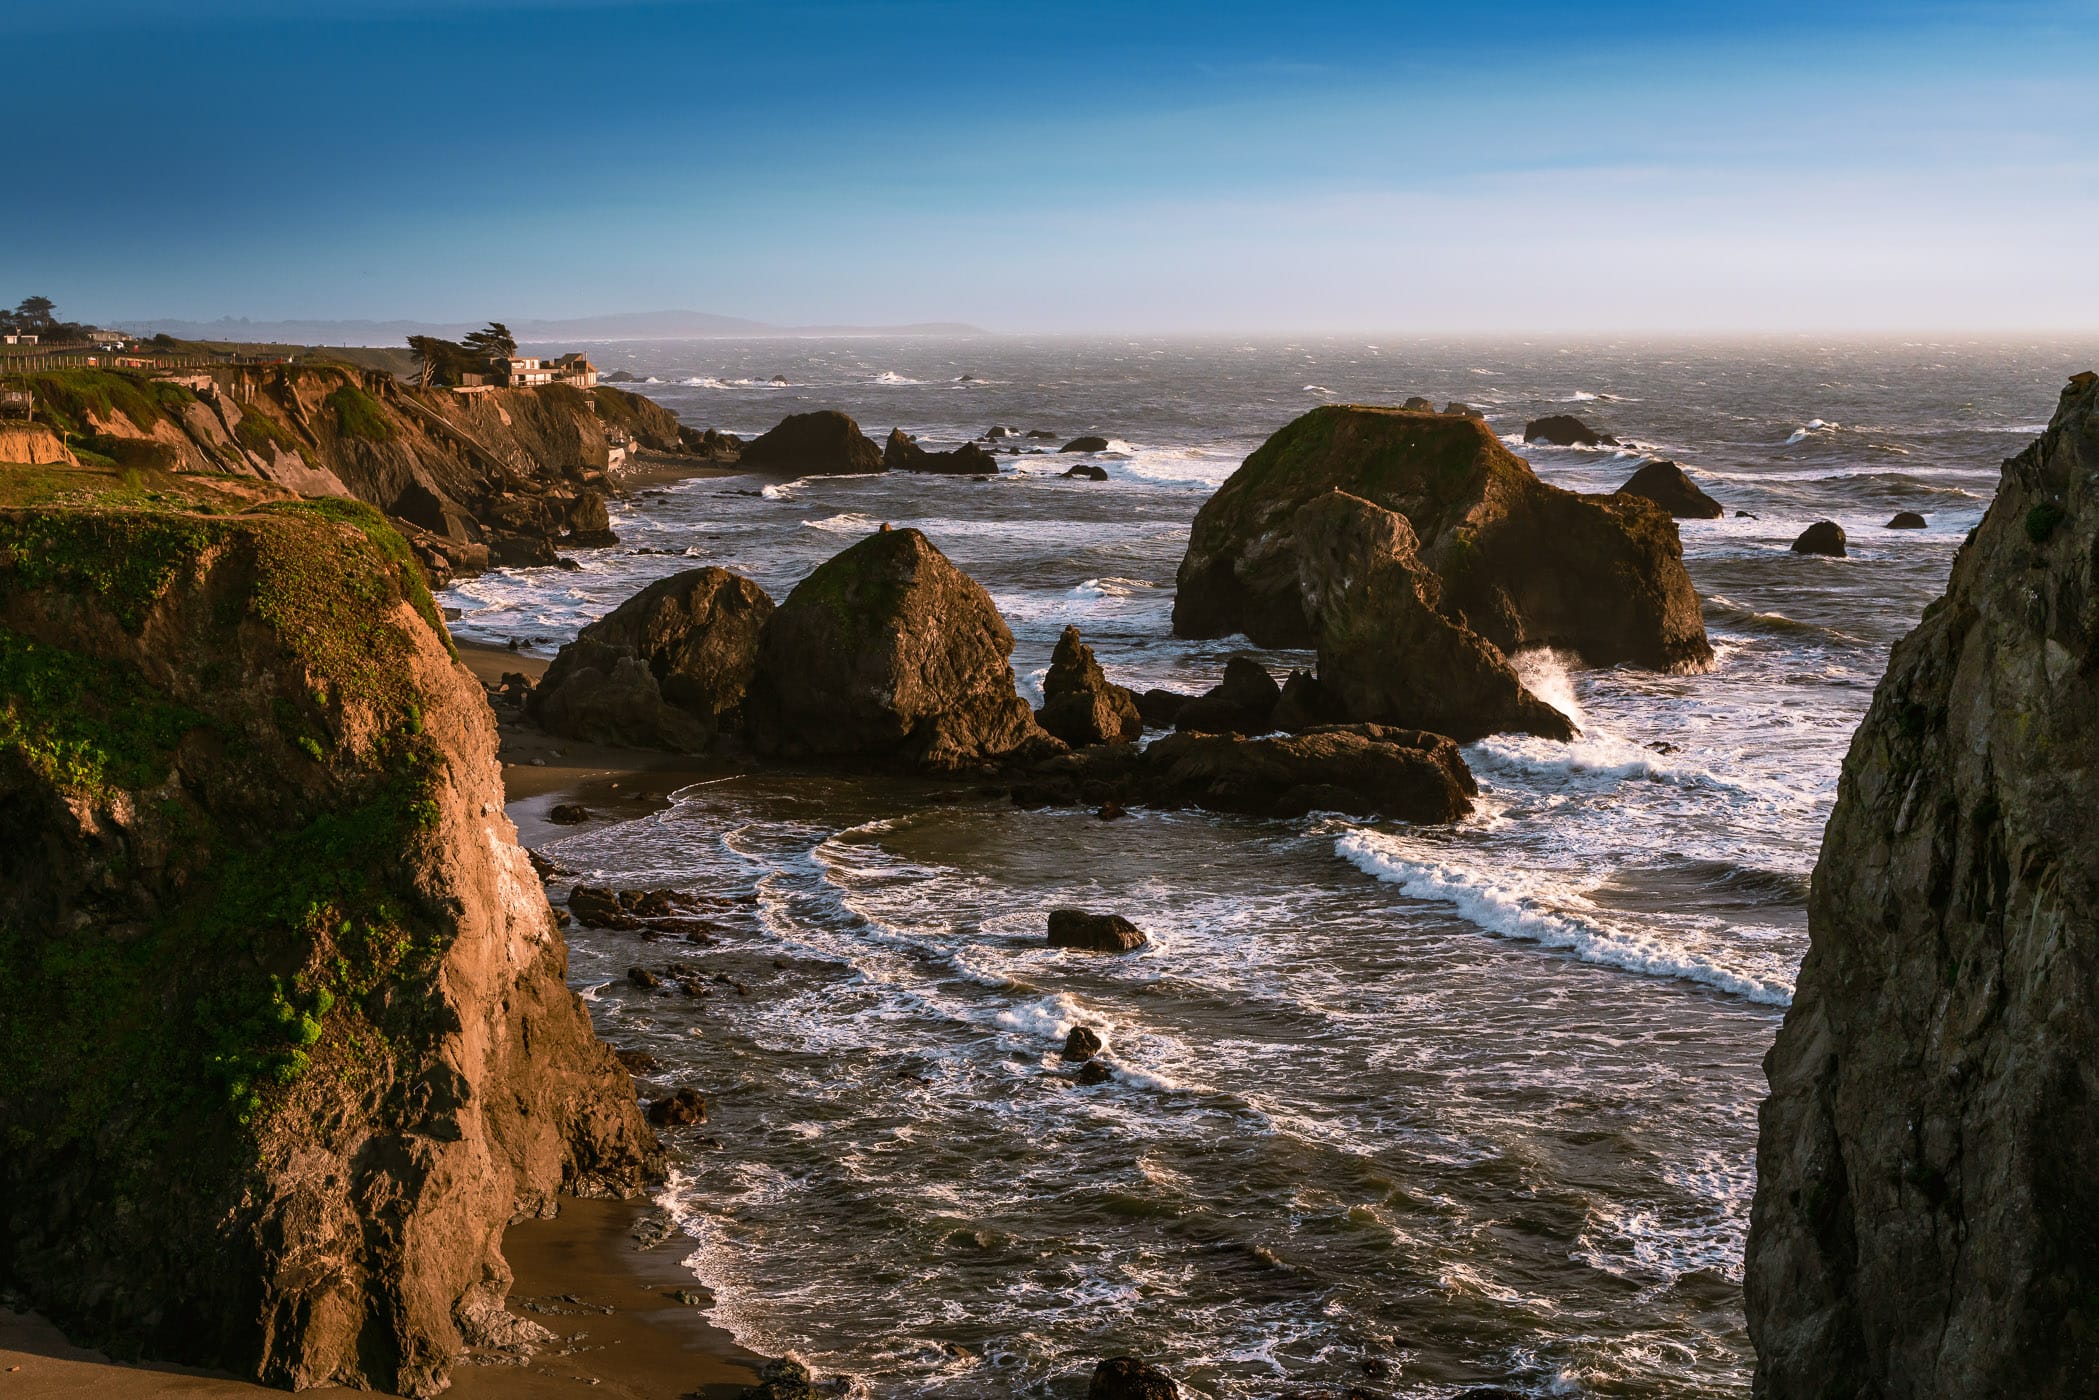 The Pacific Ocean surf churns around sea stacks at Rock Point Beach, Bodega Bay, California